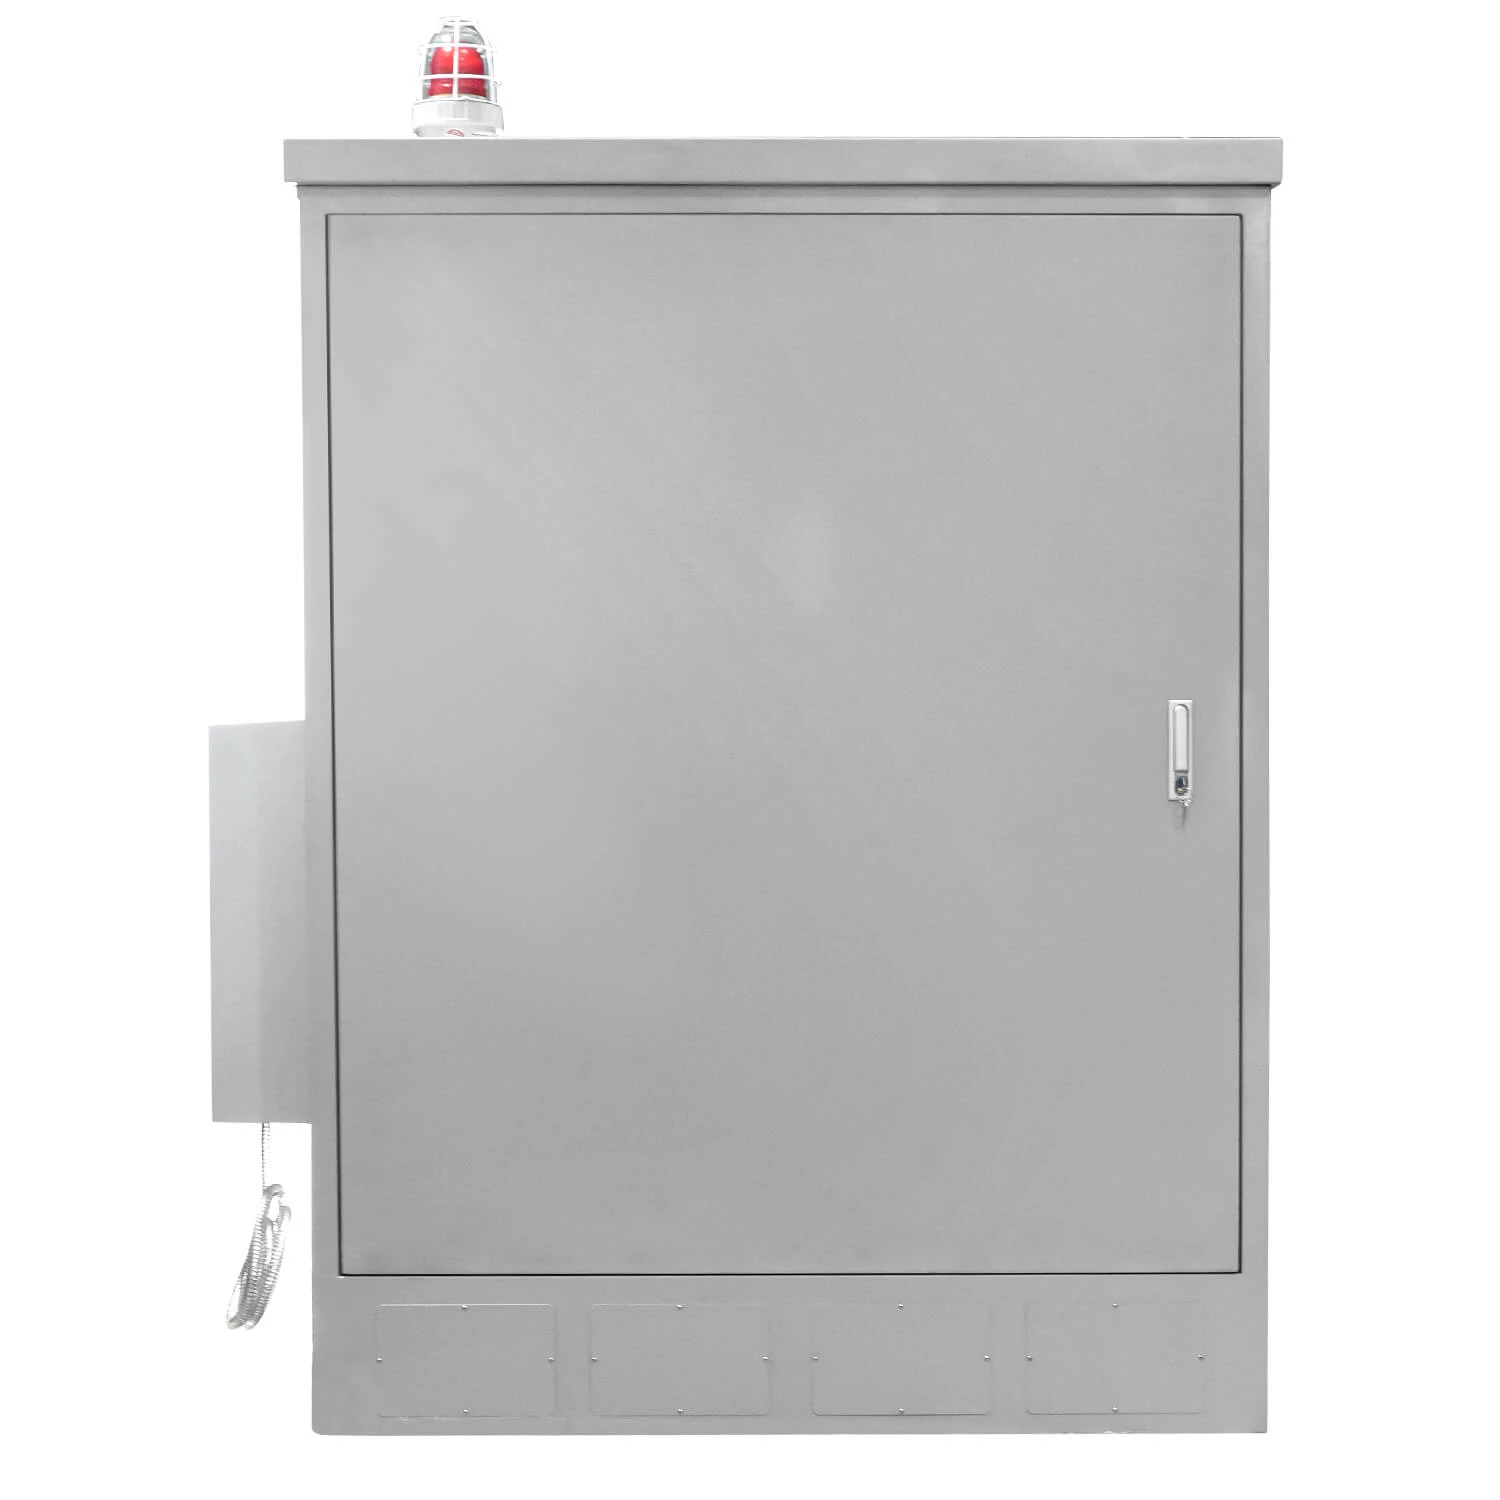 336V 75AH Outdoor Energy Storage Cabinet